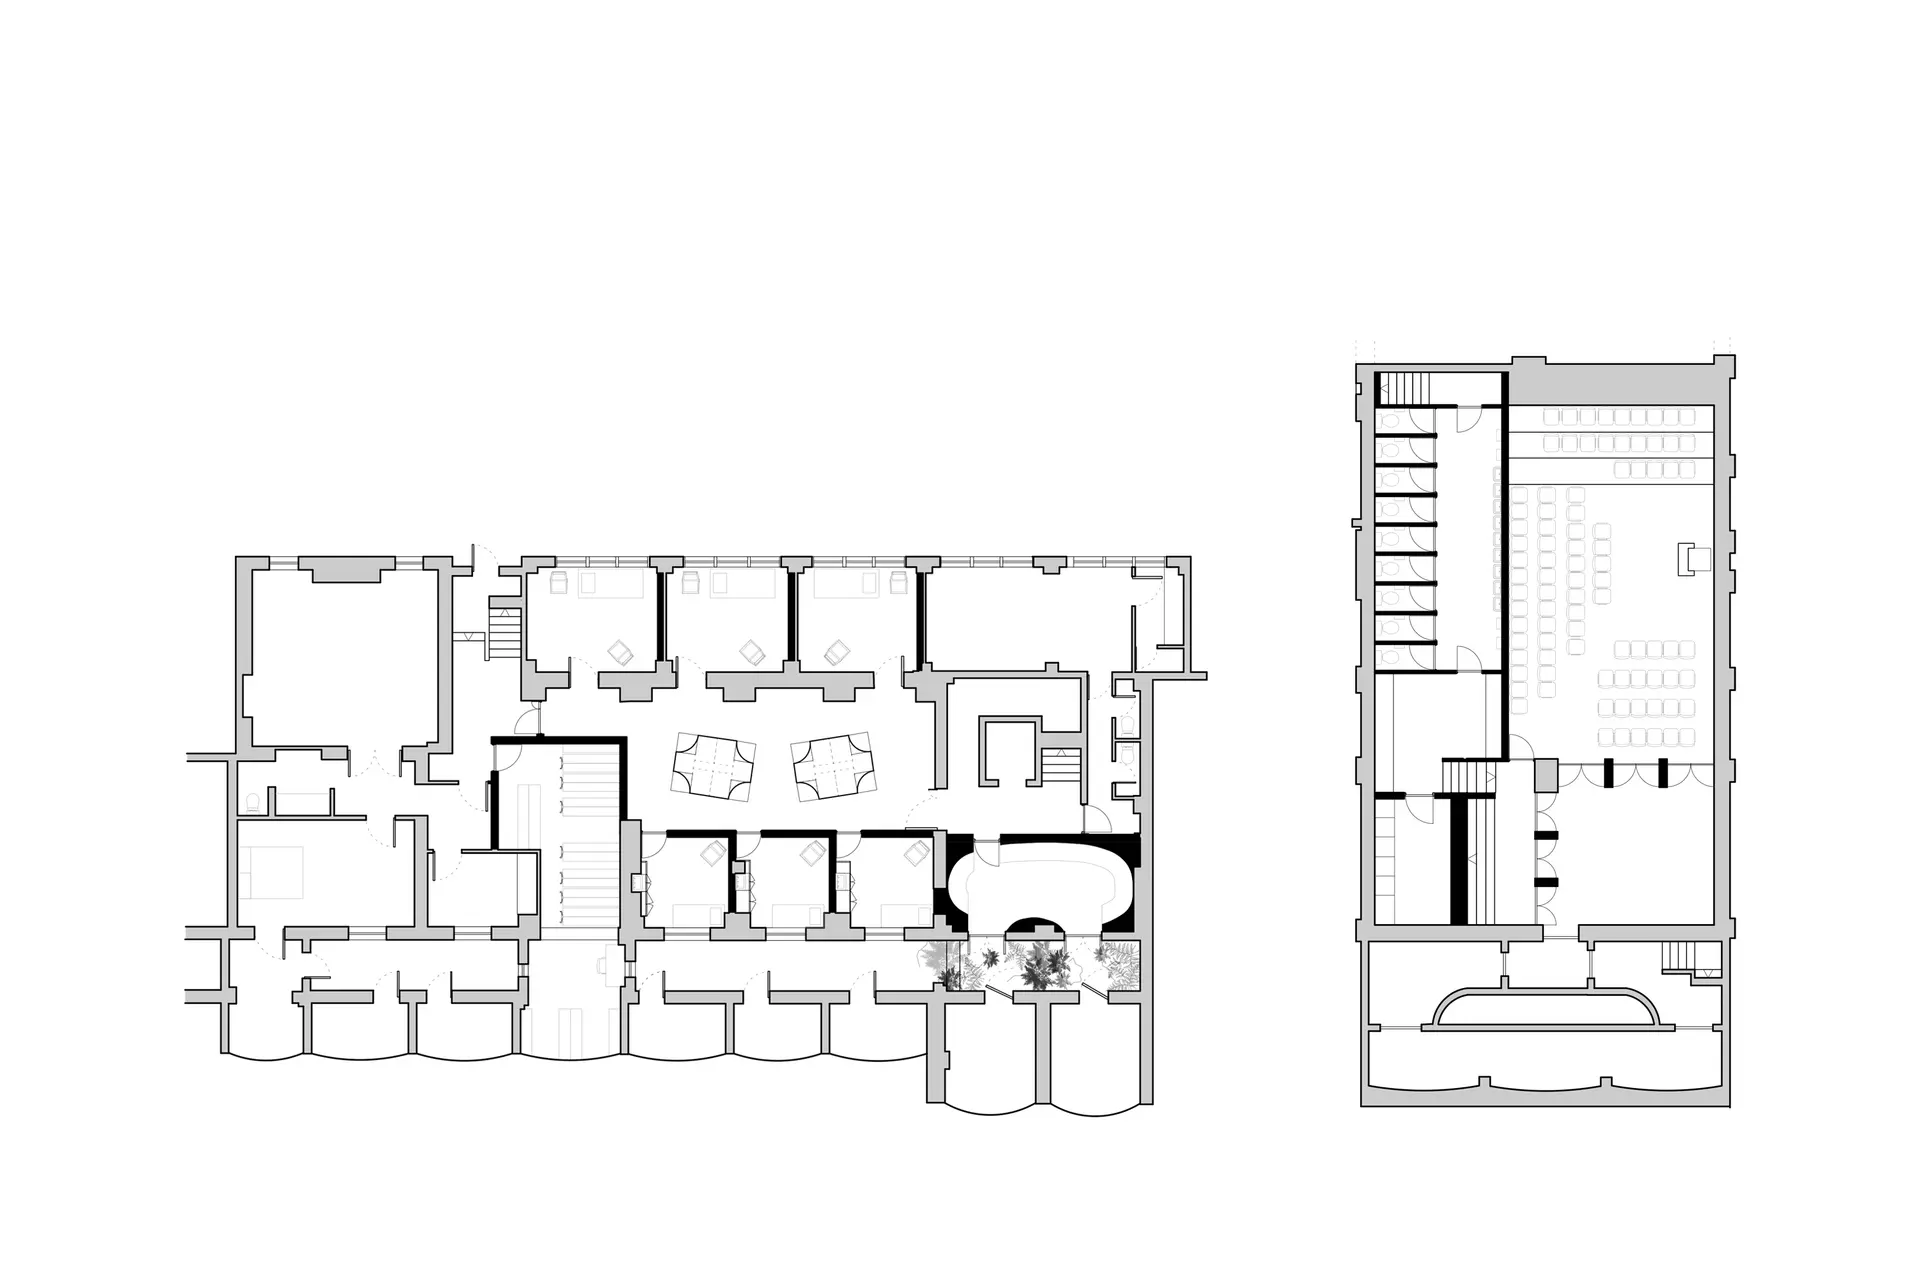 Proposed basement plan